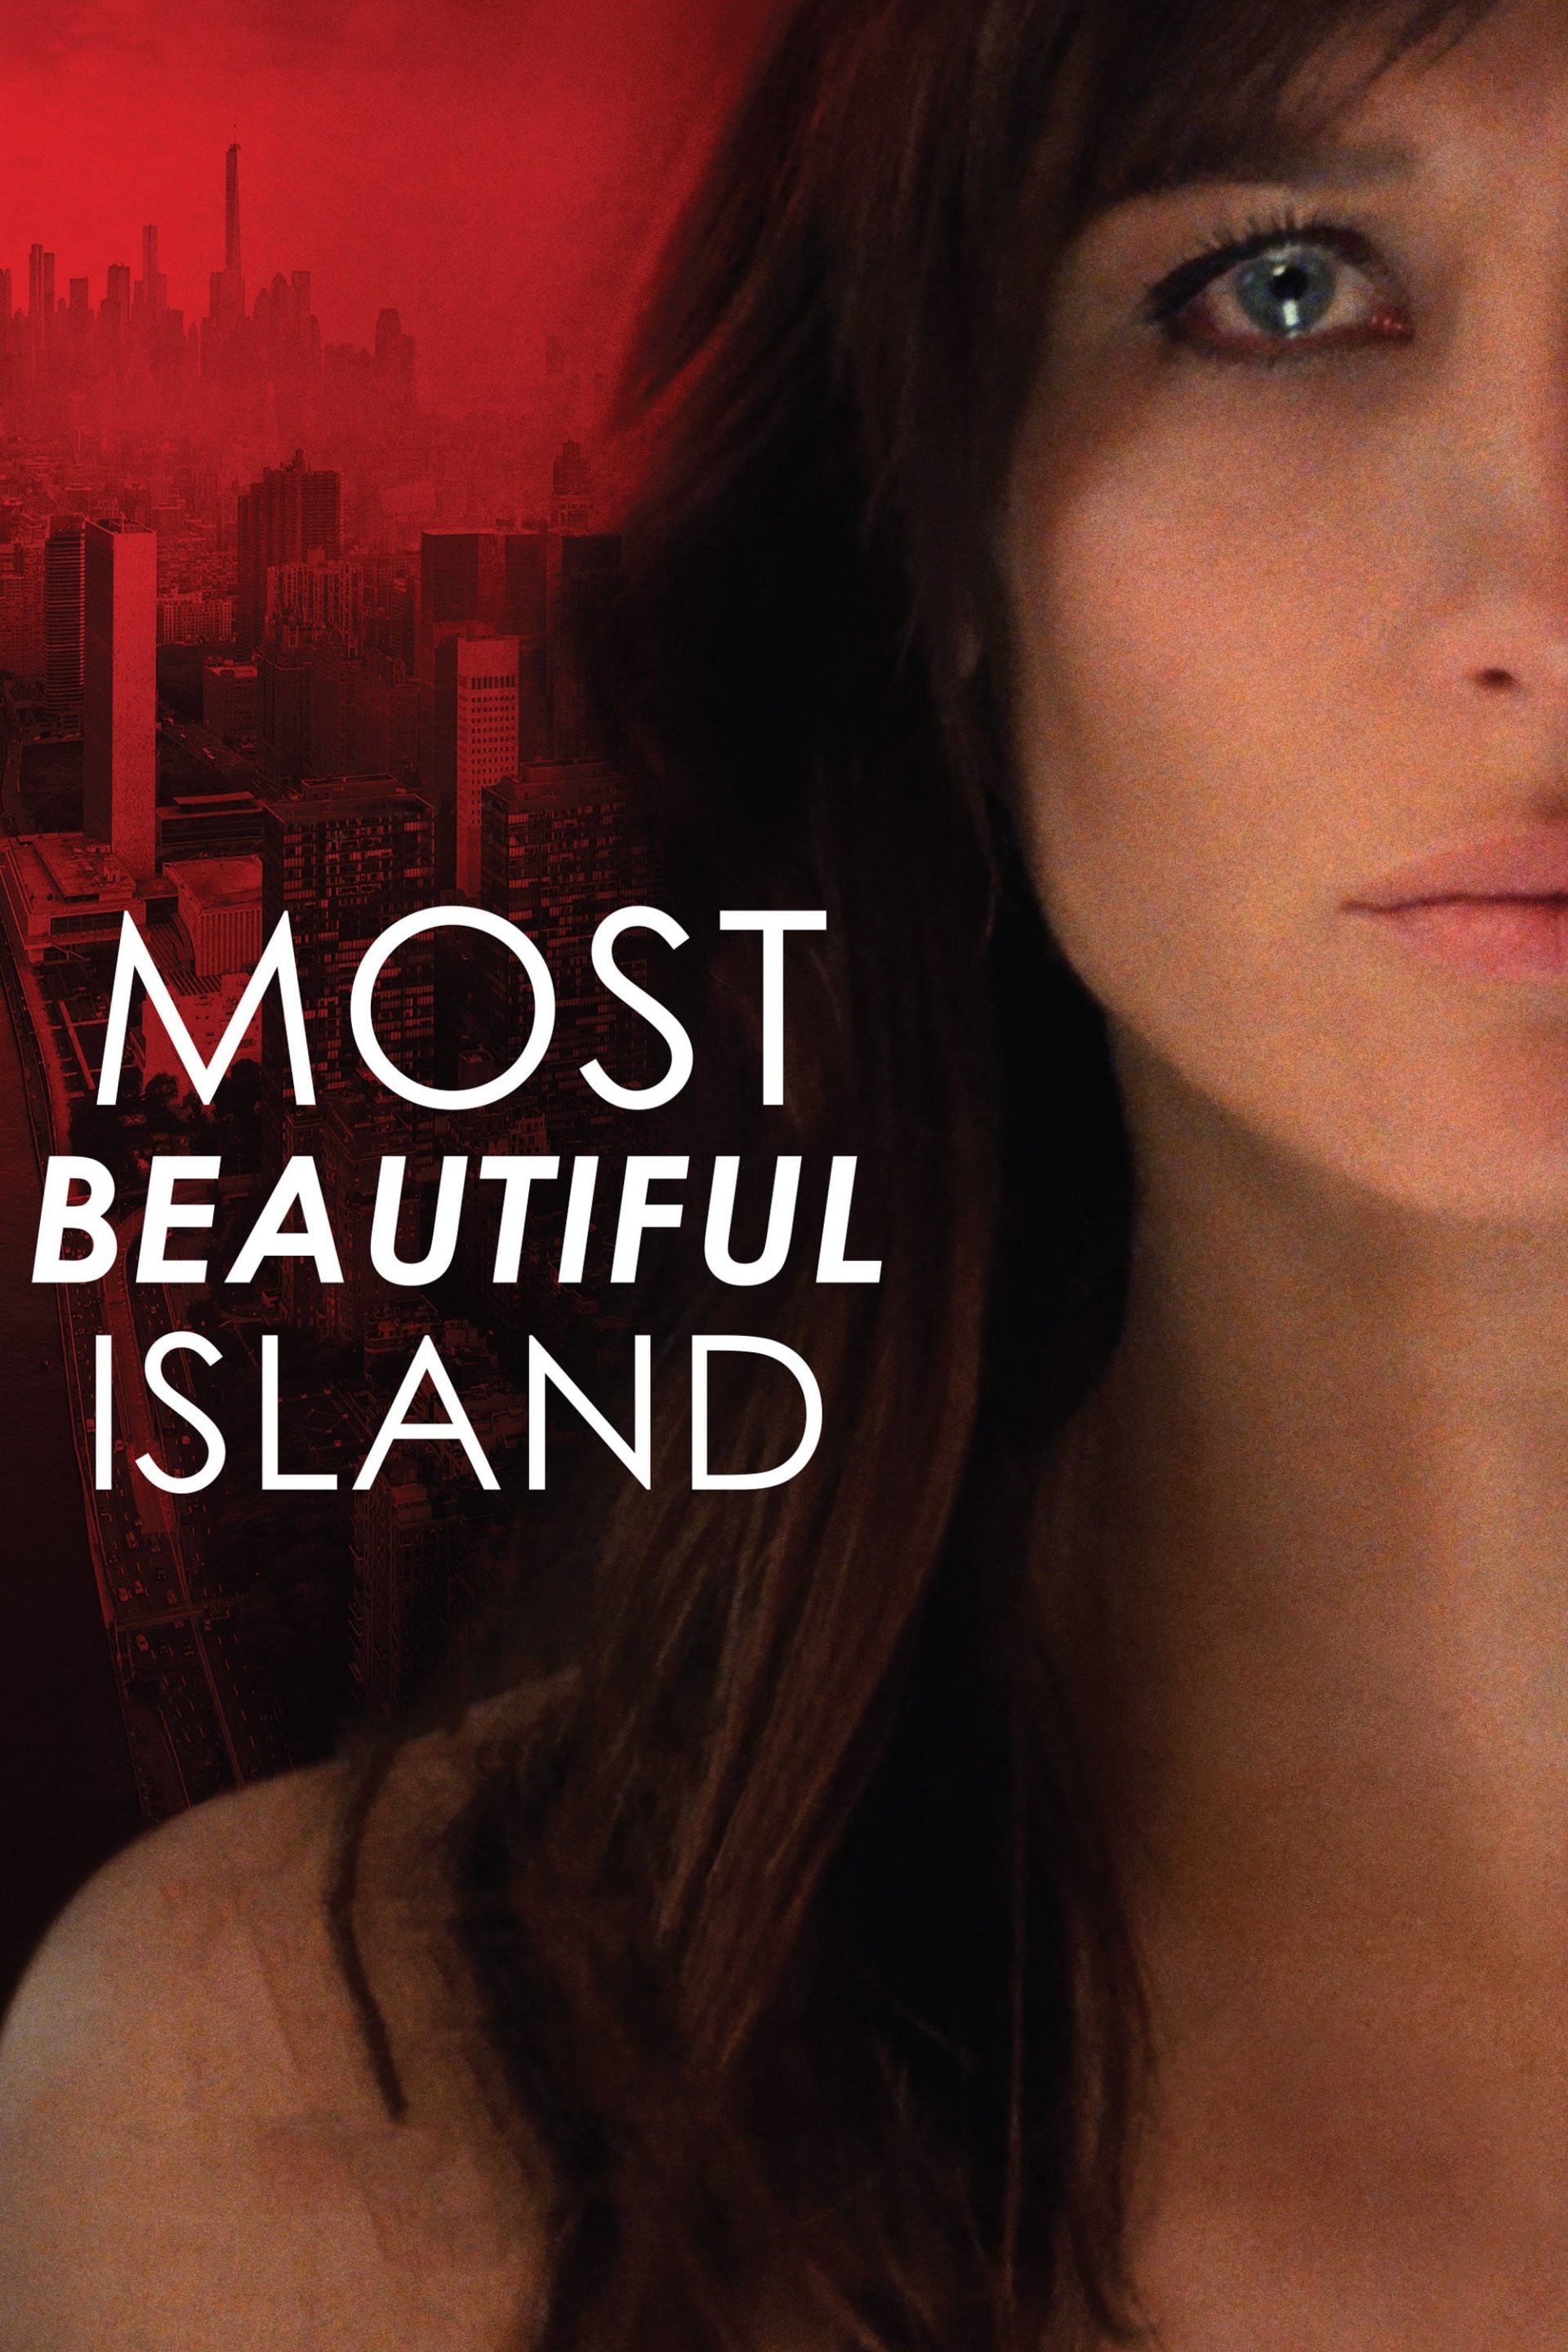 movie Most Beautiful Island Image